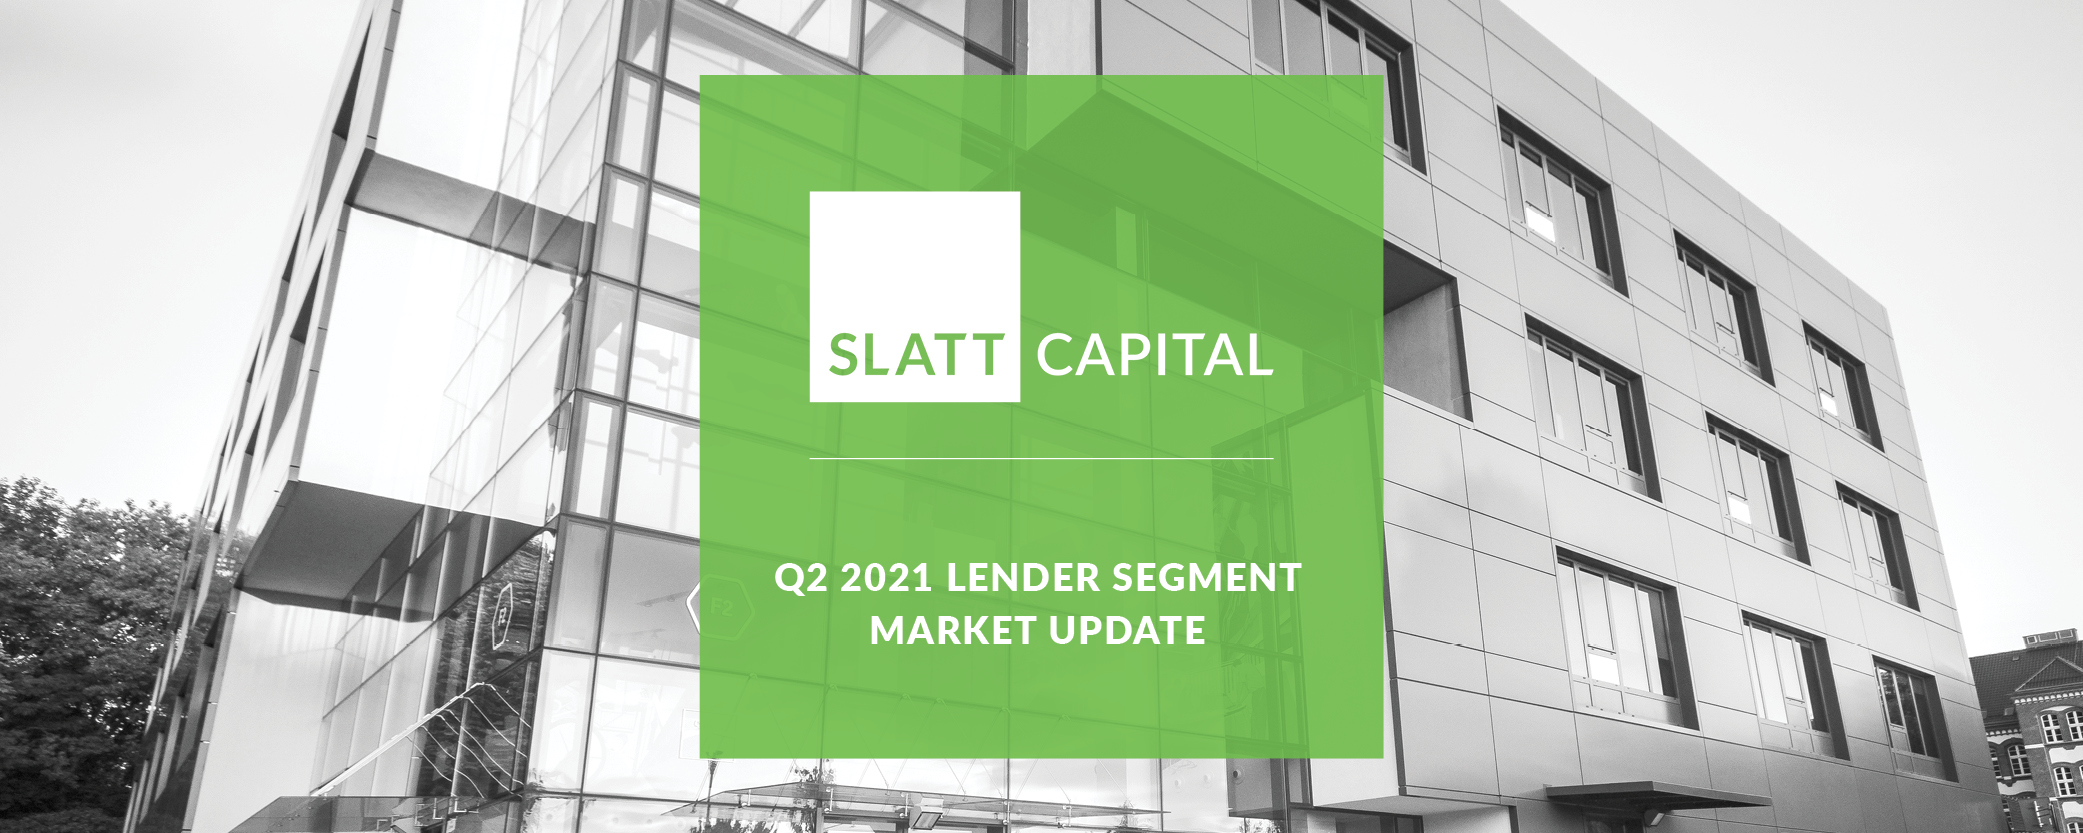 Q2 2021 Lender Segment Market Update